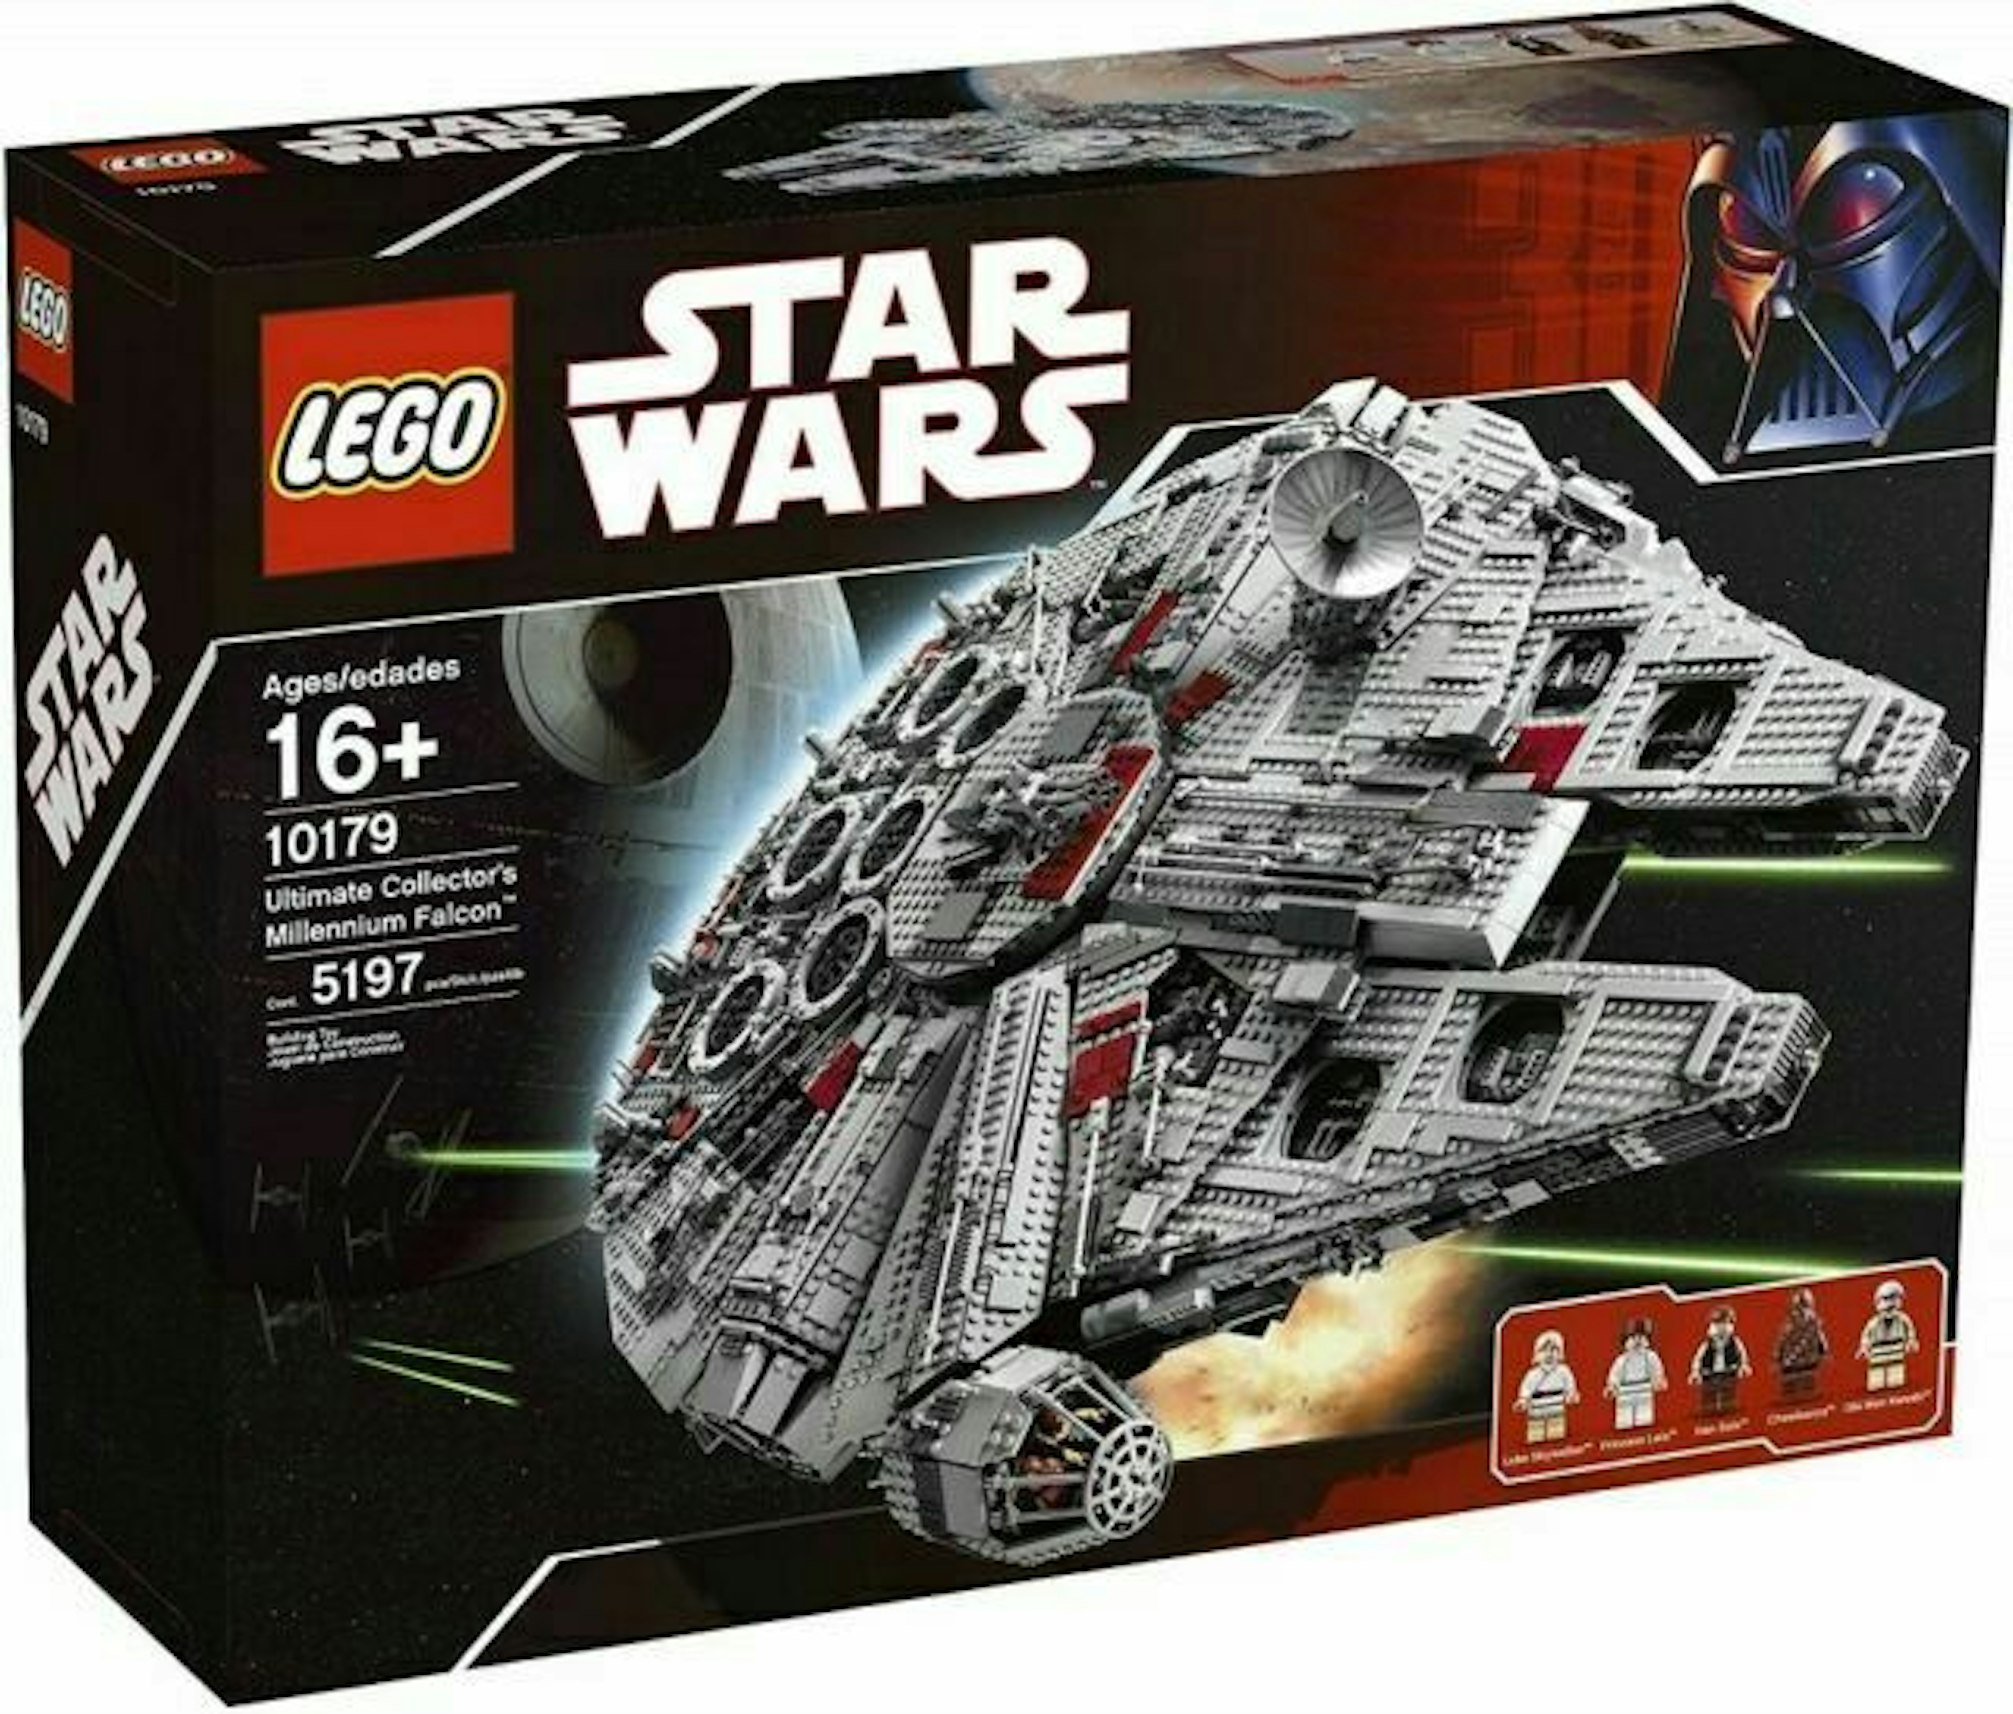 LEGO Wars Ultimate Collector's Millennium Falcon Set 10179 - US